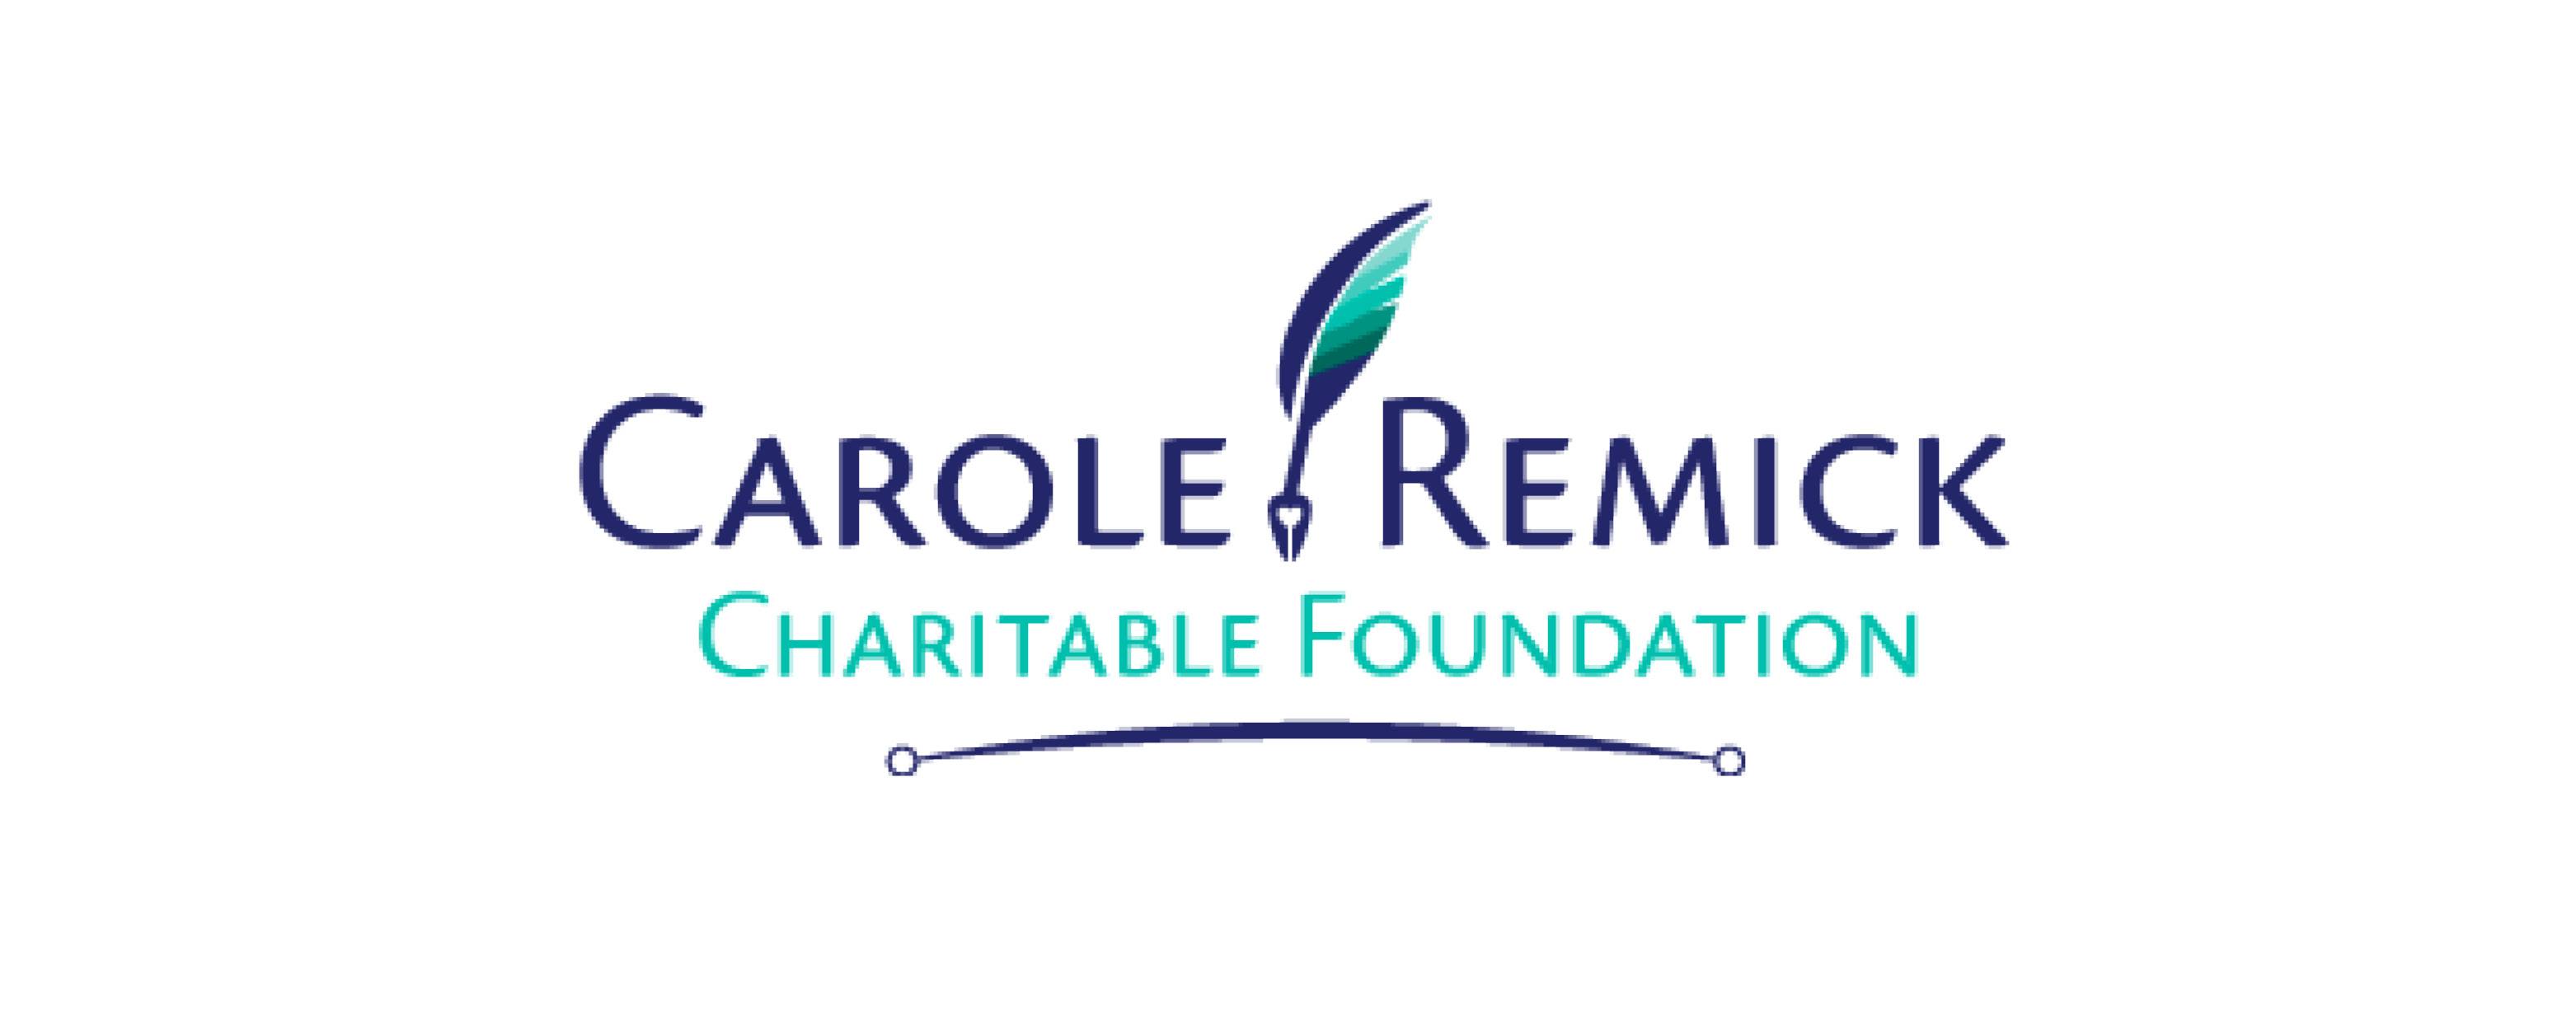 Carole Remick Foundation